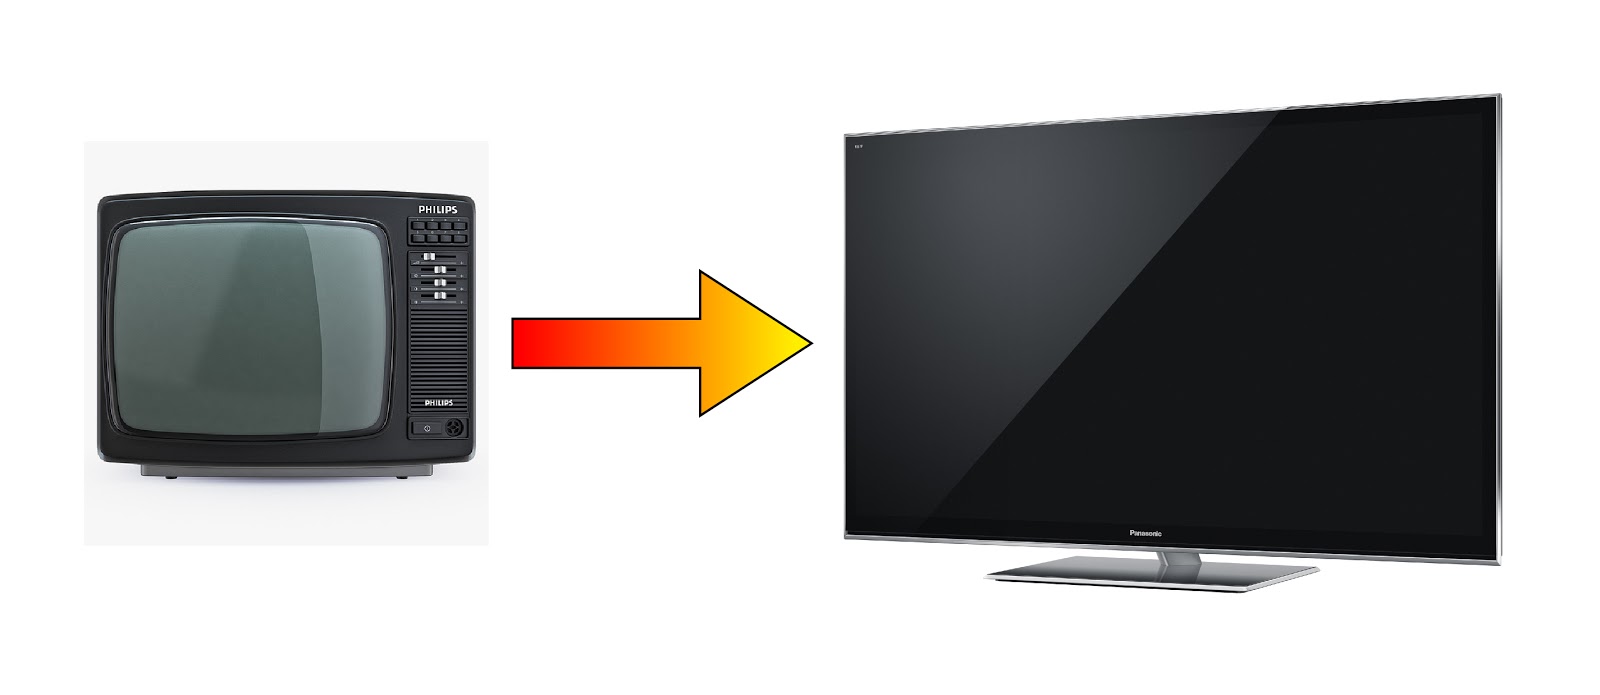 Обмен нового телевизора. RCA CT-100 телевизор. Старый телевизор. Старый и новый телевизор. Новый телевизор.